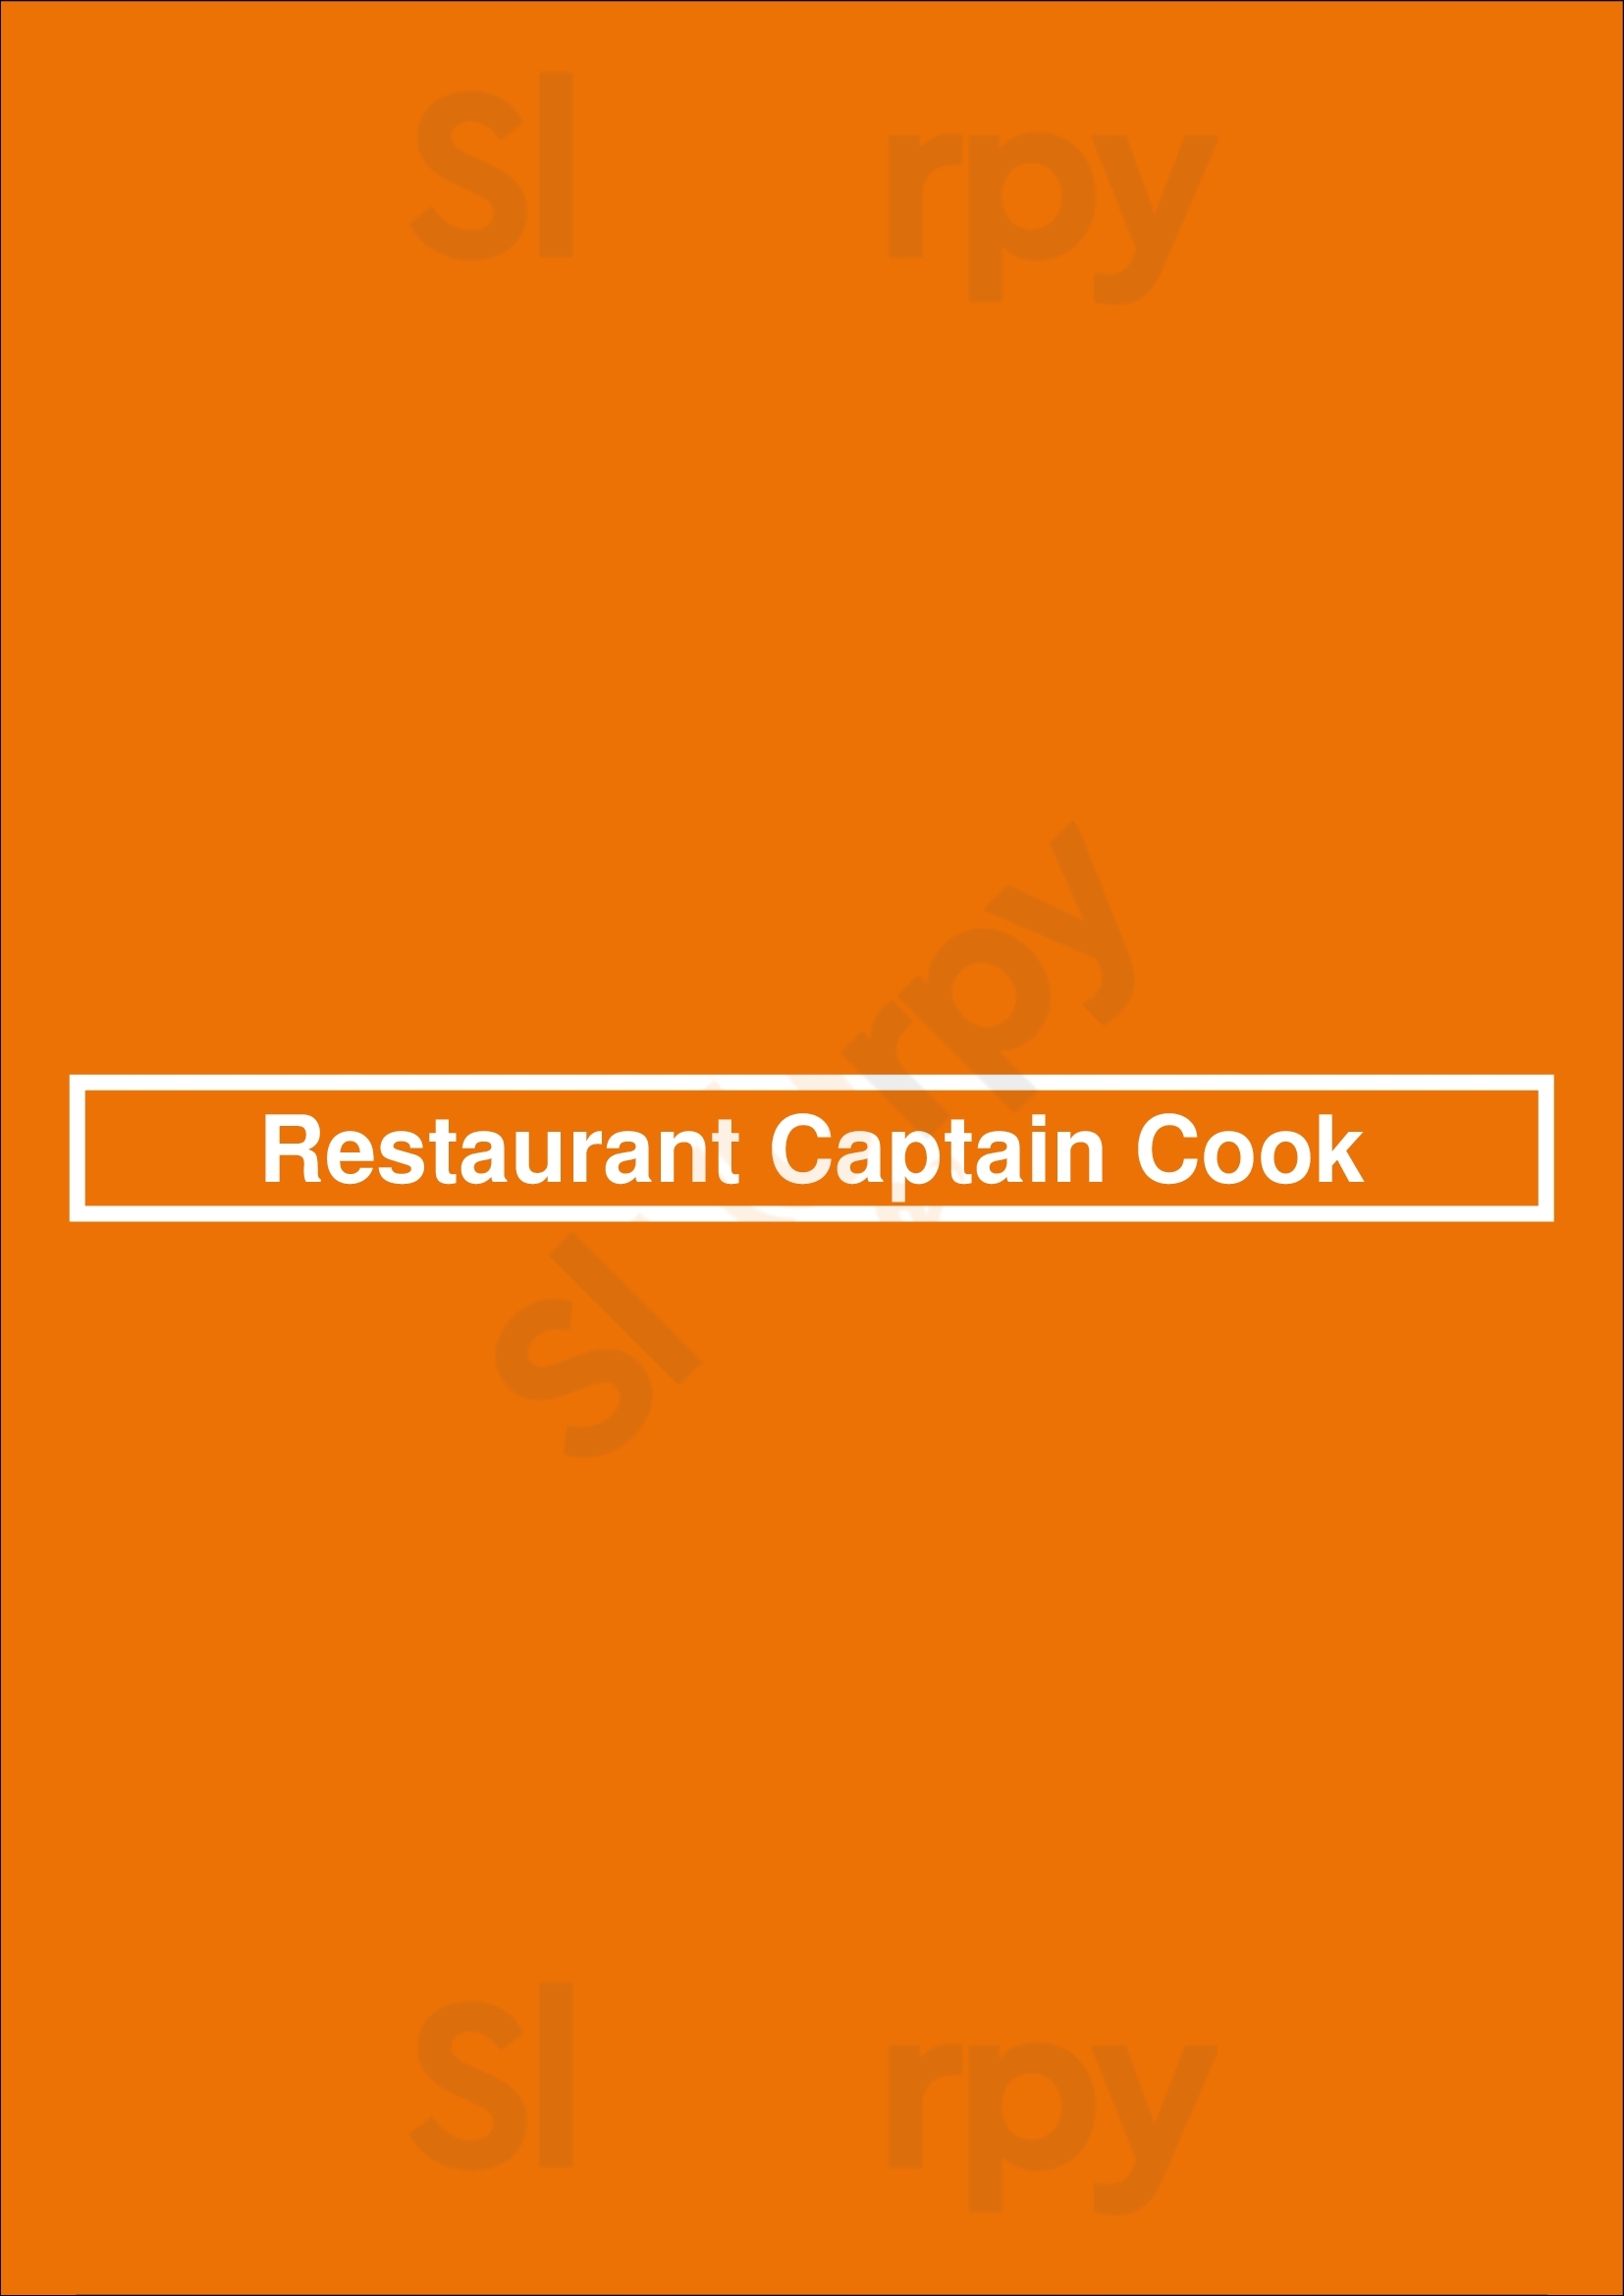 Restaurant Captain Cook Ypres Menu - 1